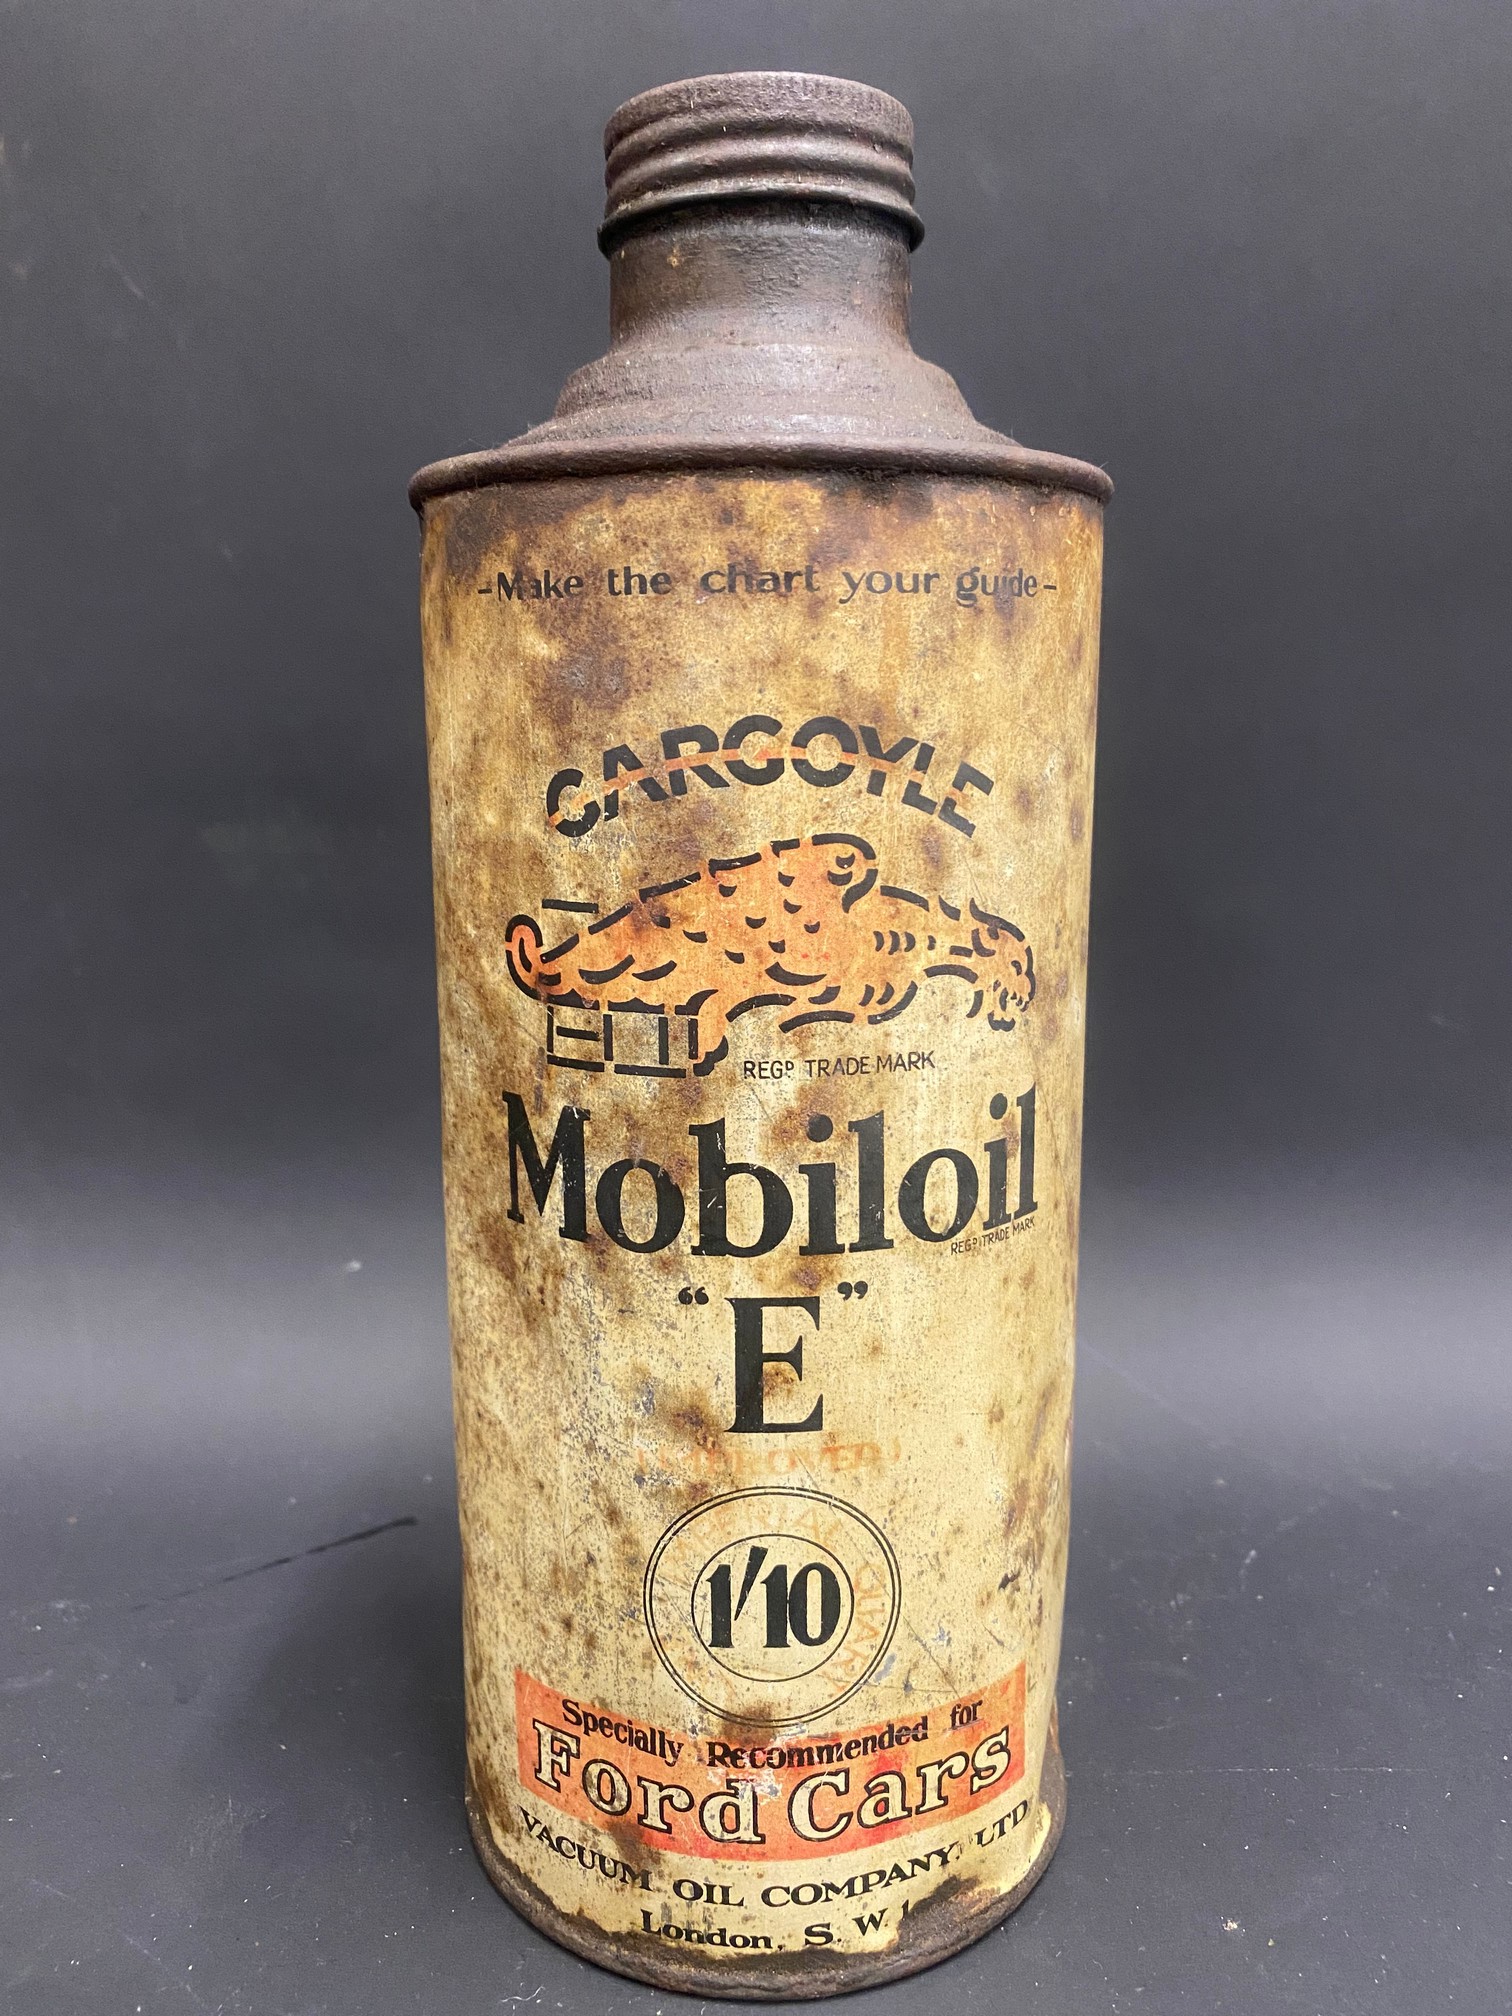 A Gargoyle Mobiloil 'E' Grade for Ford Cars quart cylindrical oil can. - Image 2 of 4